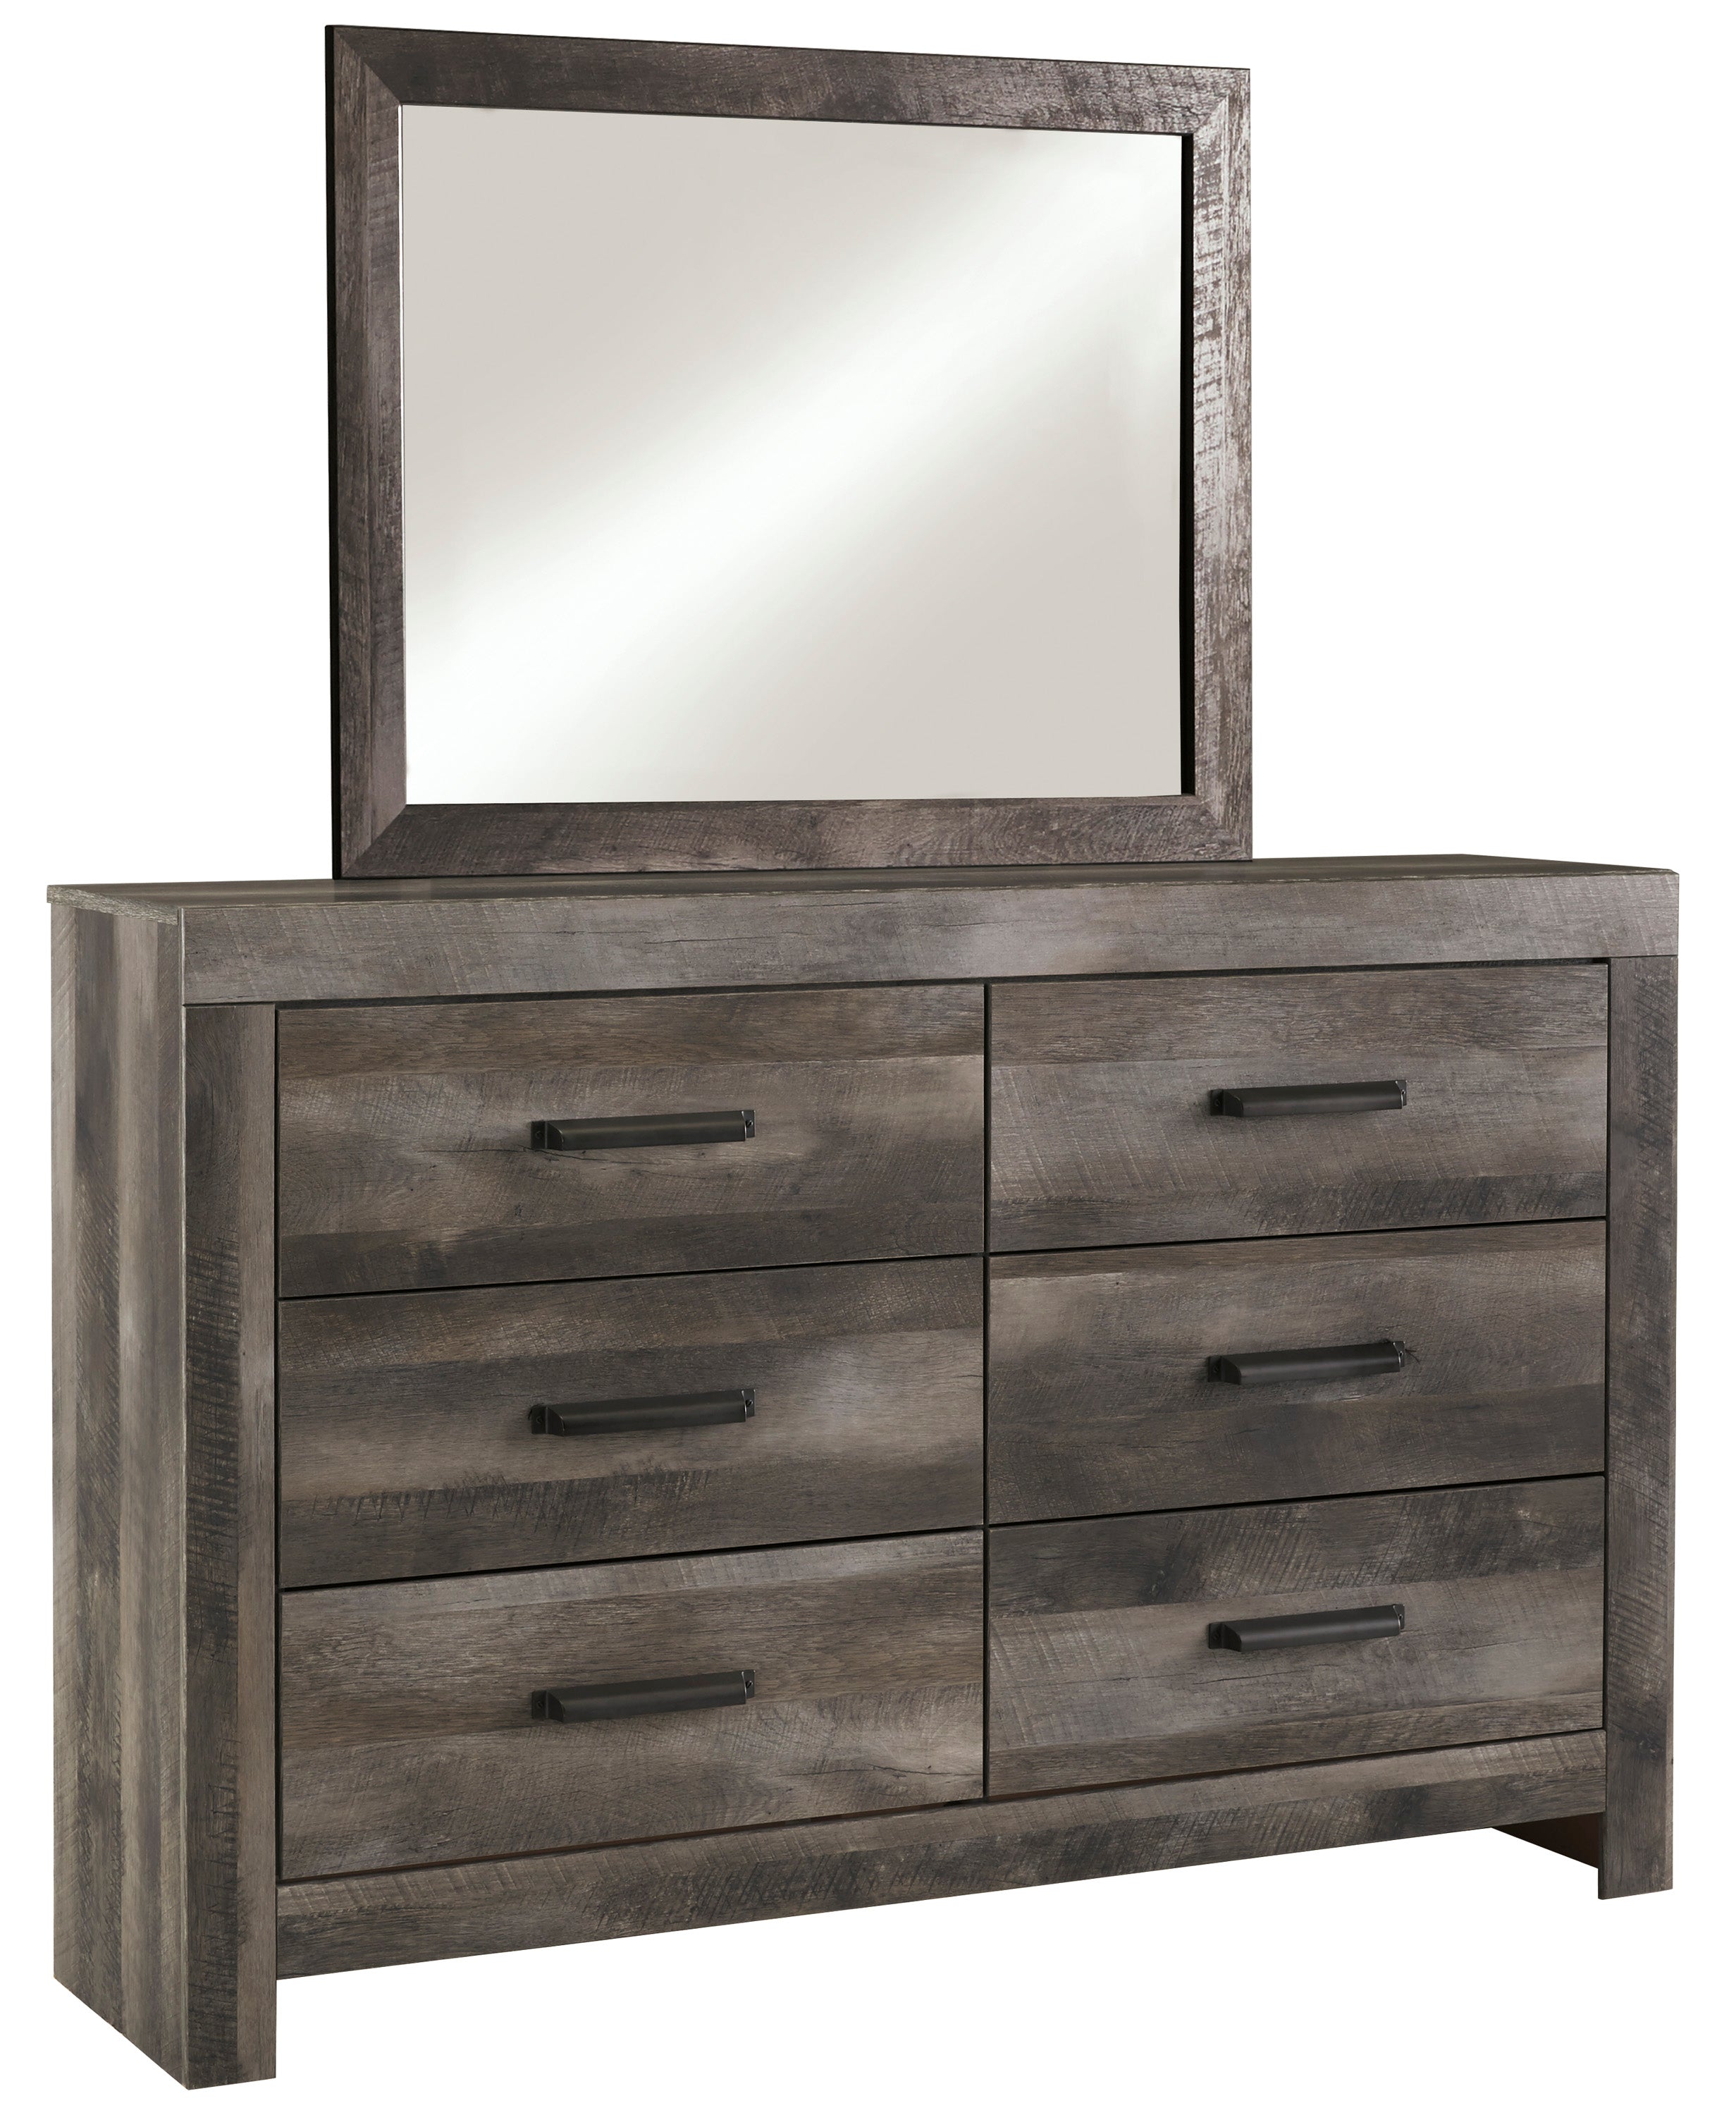 Wynnlow Dresser and Mirror